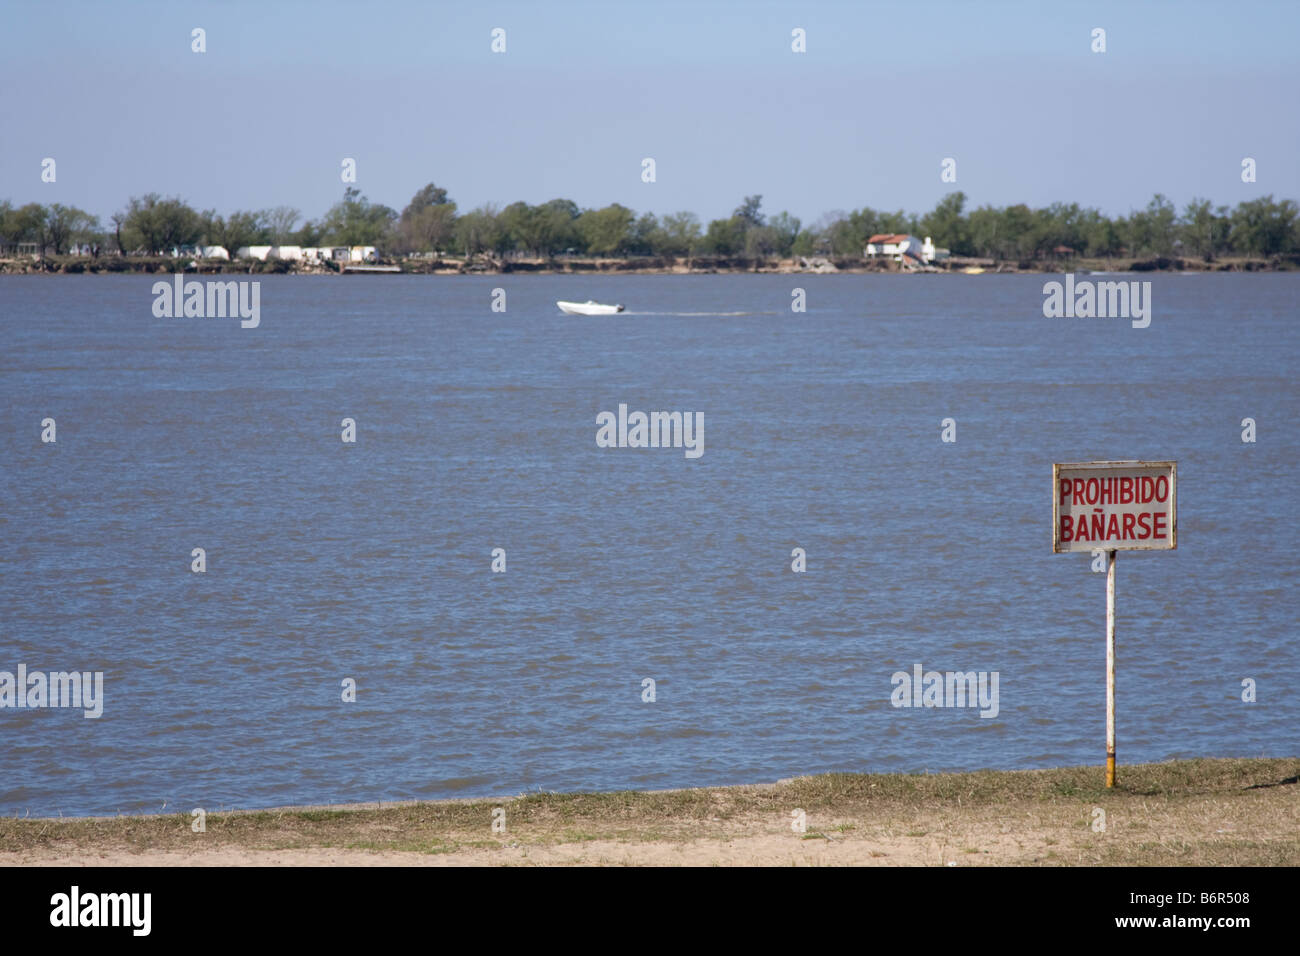 Prohibido bañarse. Swimming Forbidden sign in Parana river. Rosario, Argentina. Stock Photo